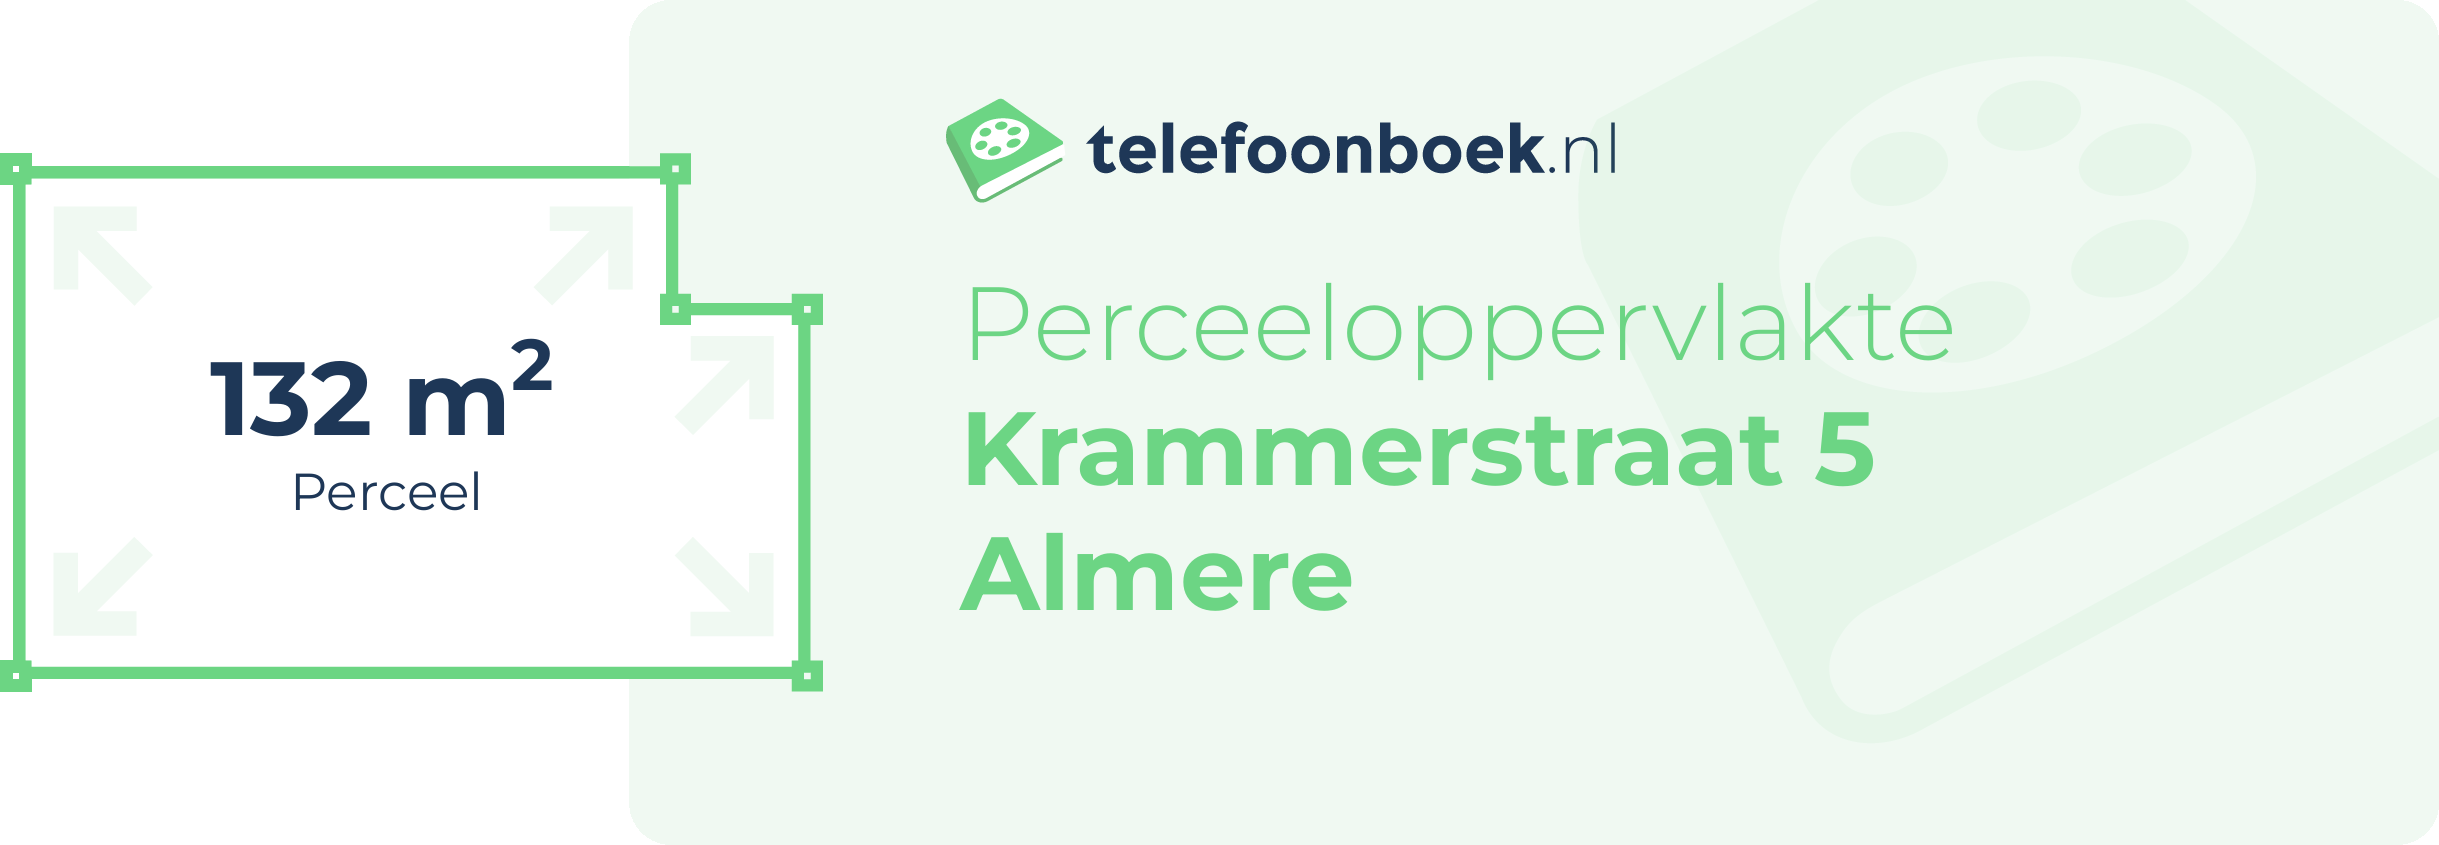 Perceeloppervlakte Krammerstraat 5 Almere